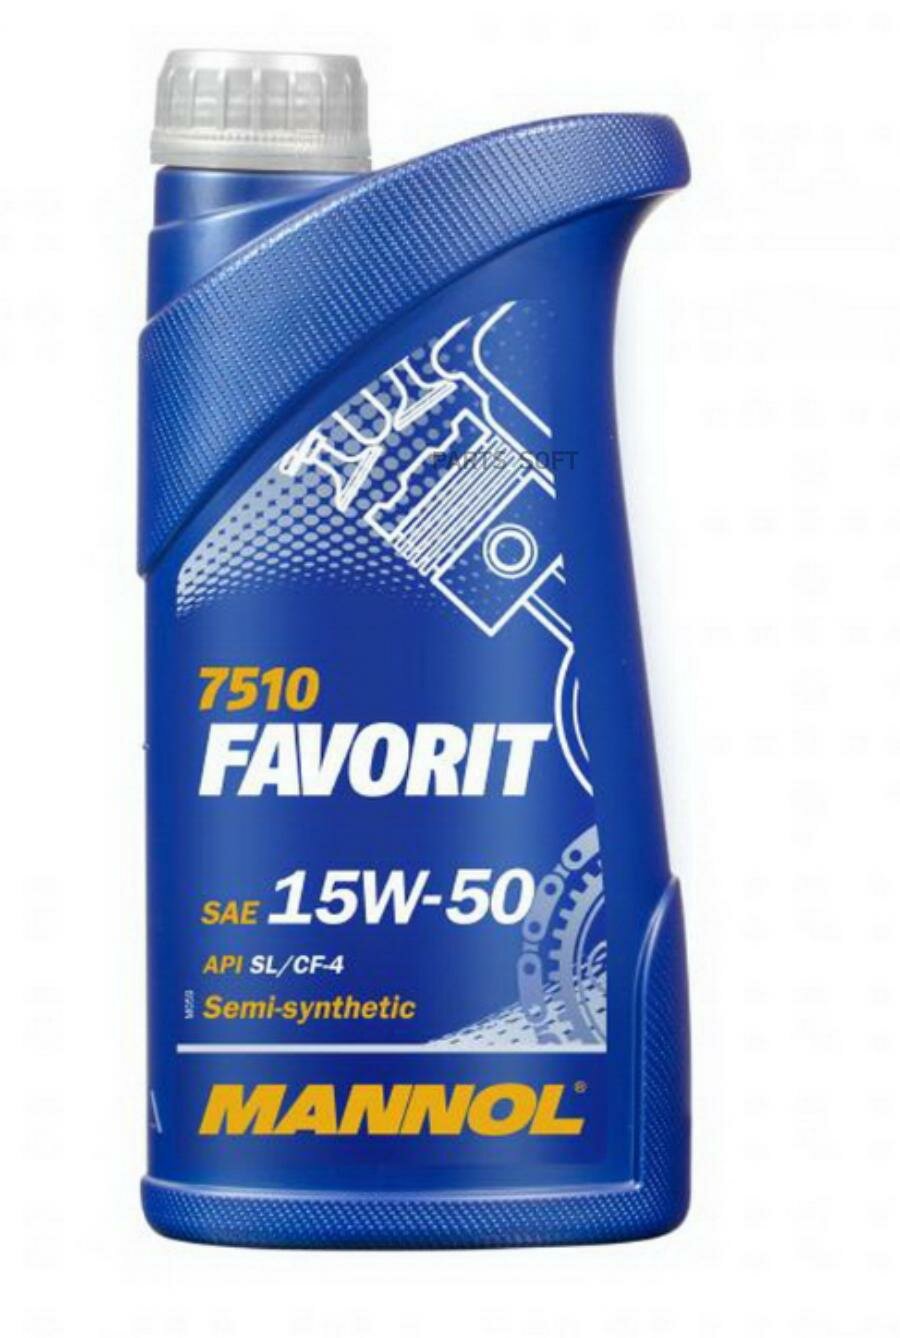 7510-1 mannol favorit 15w50 1 л. полусинтетическое моторное масло 15w-50